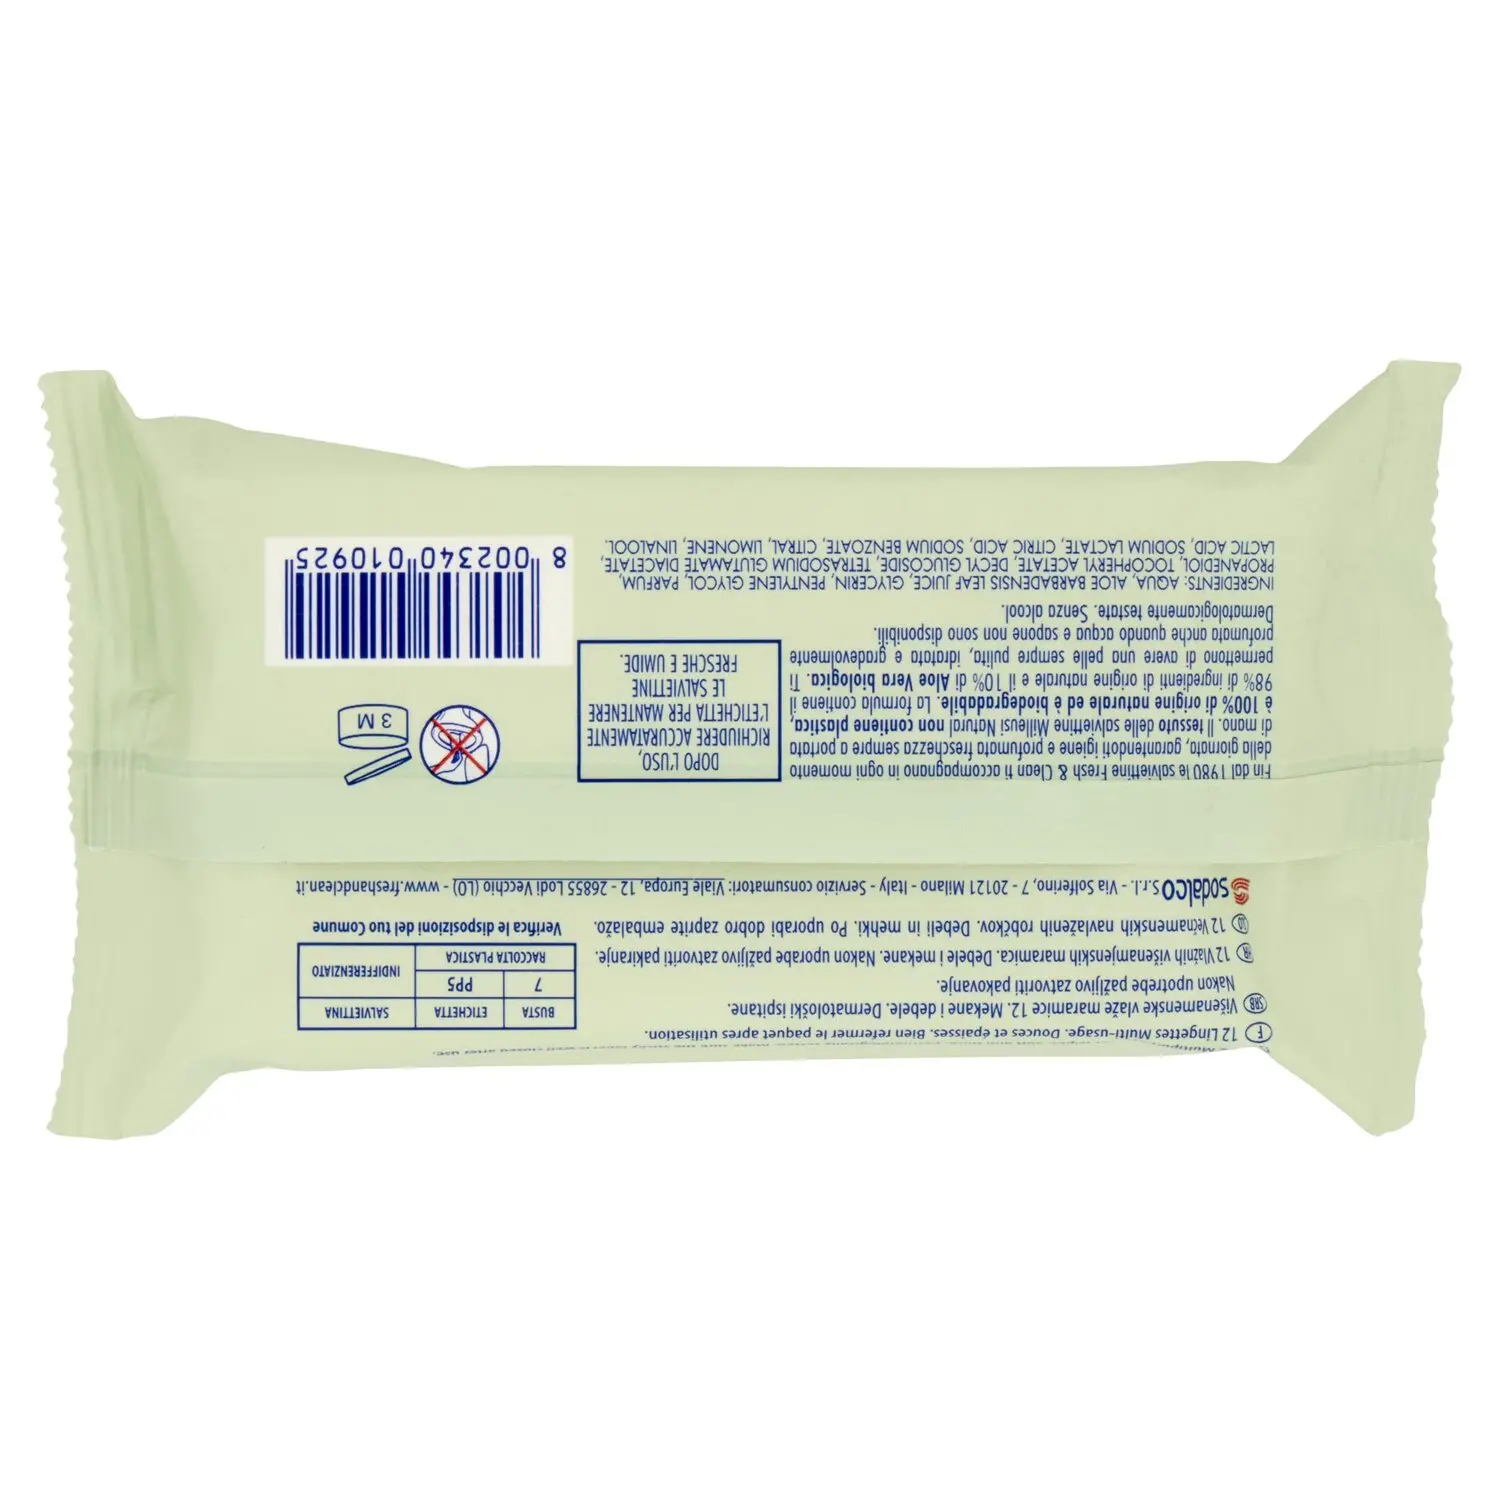 Fresh & Clean milleusi white musk salviettine umidificate 12 pz